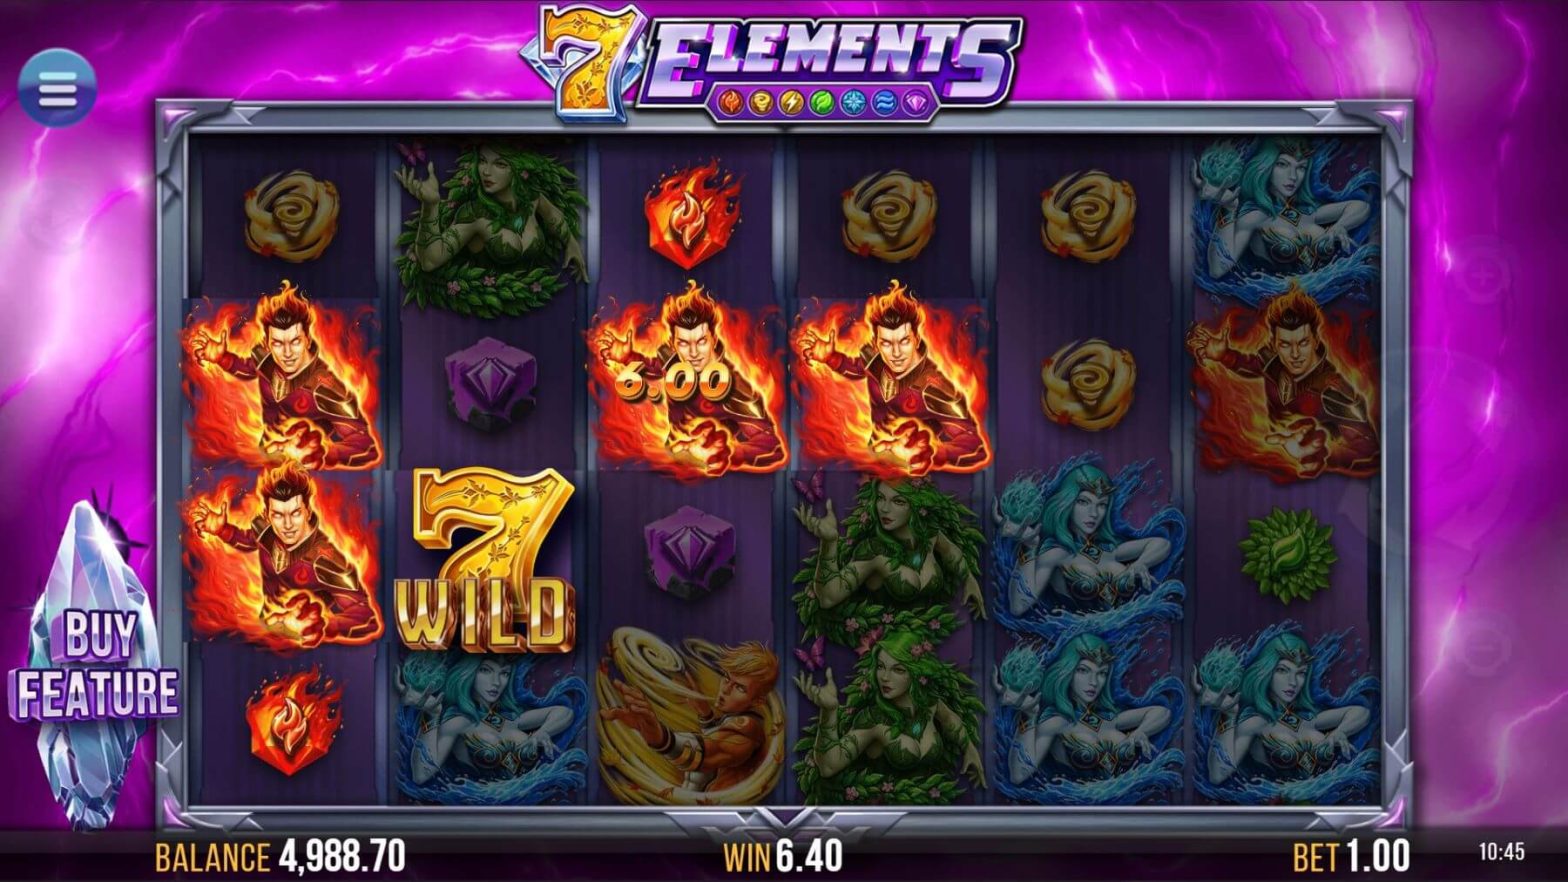 7 Elements free